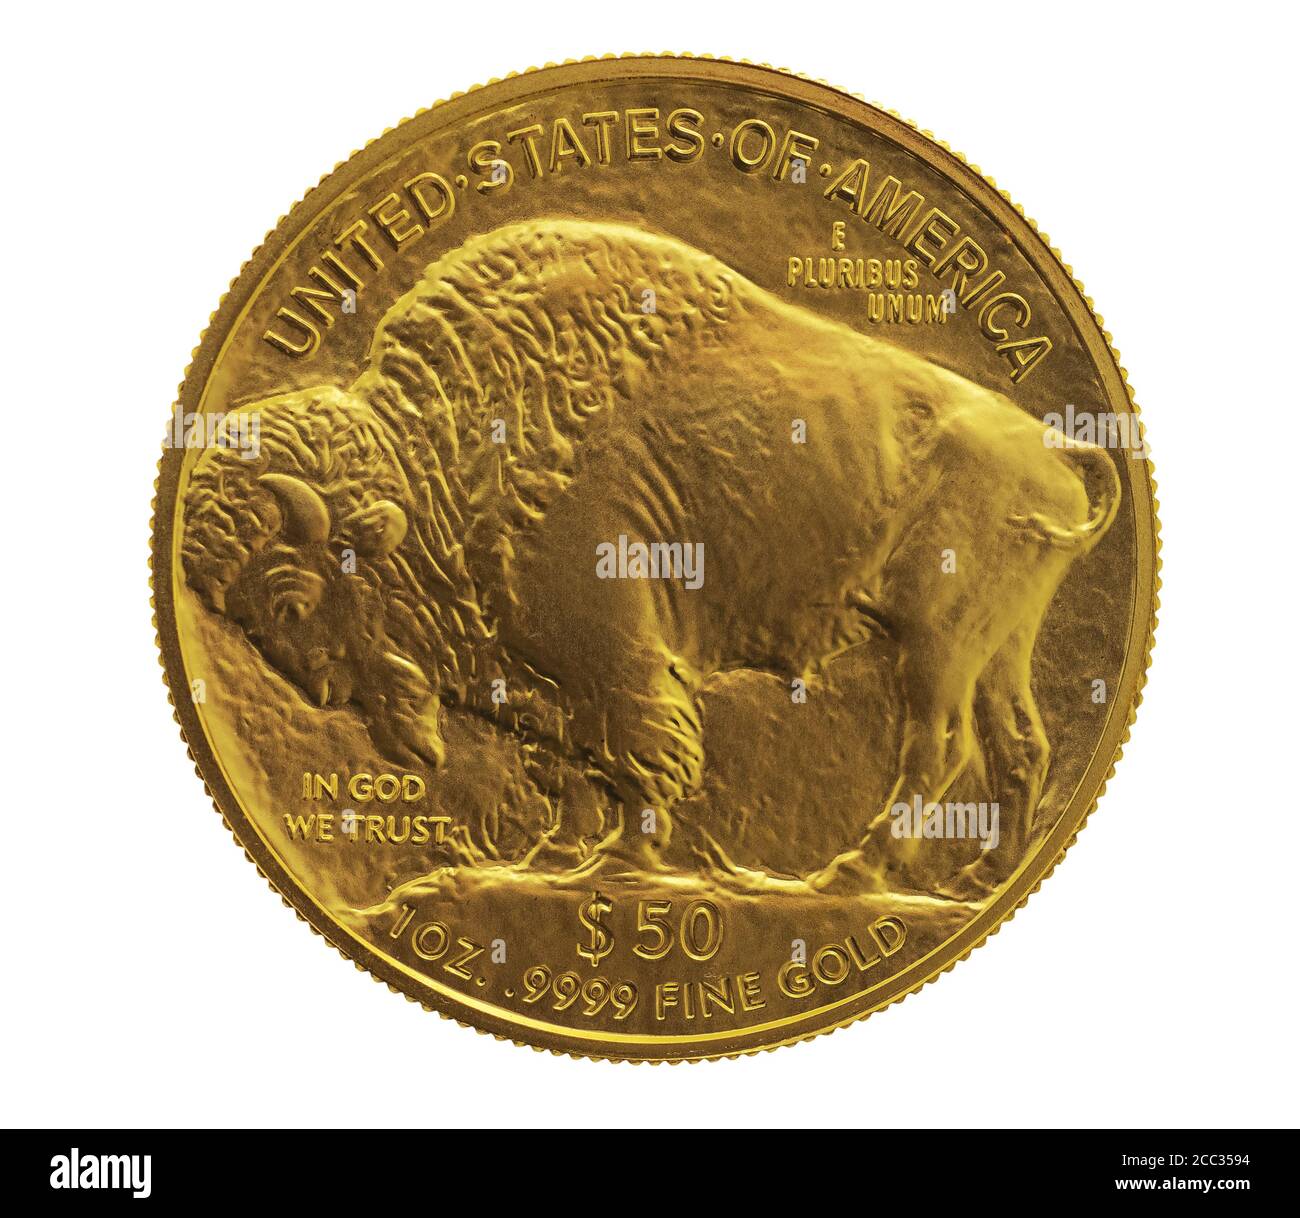 Gold American Buffalo $ 50. 1 oz. coin, isolated Stock Photo